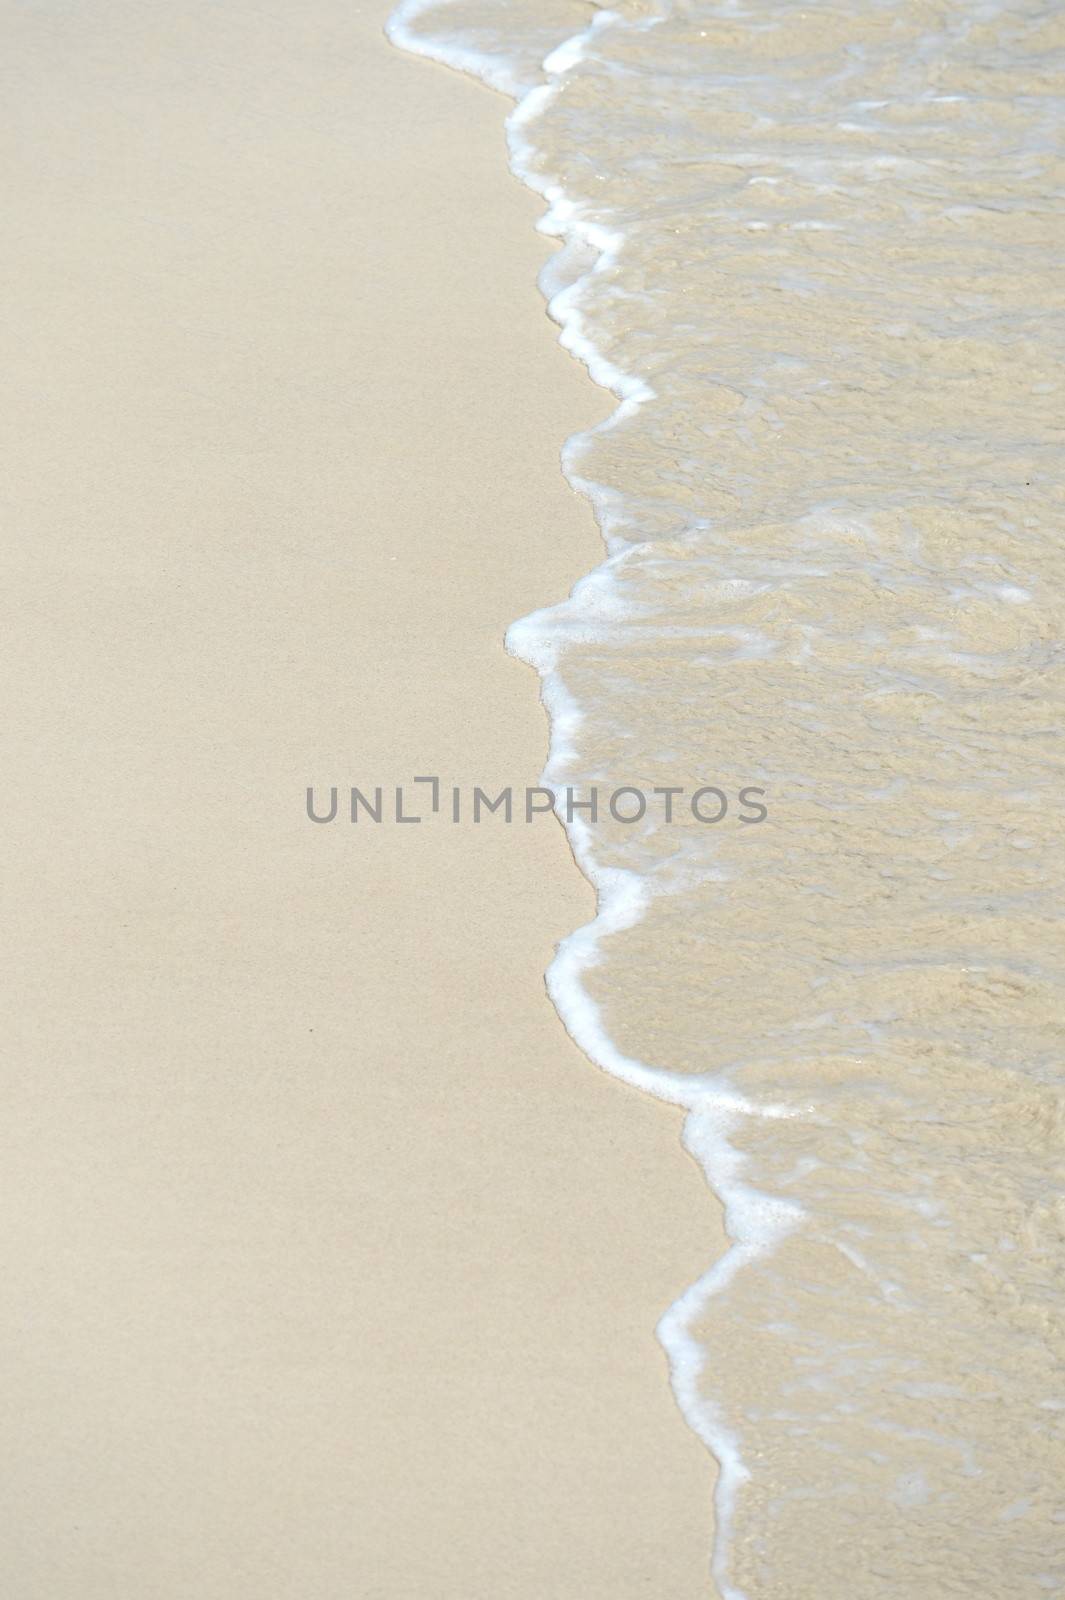 An abstract australian coastal seaside beach image